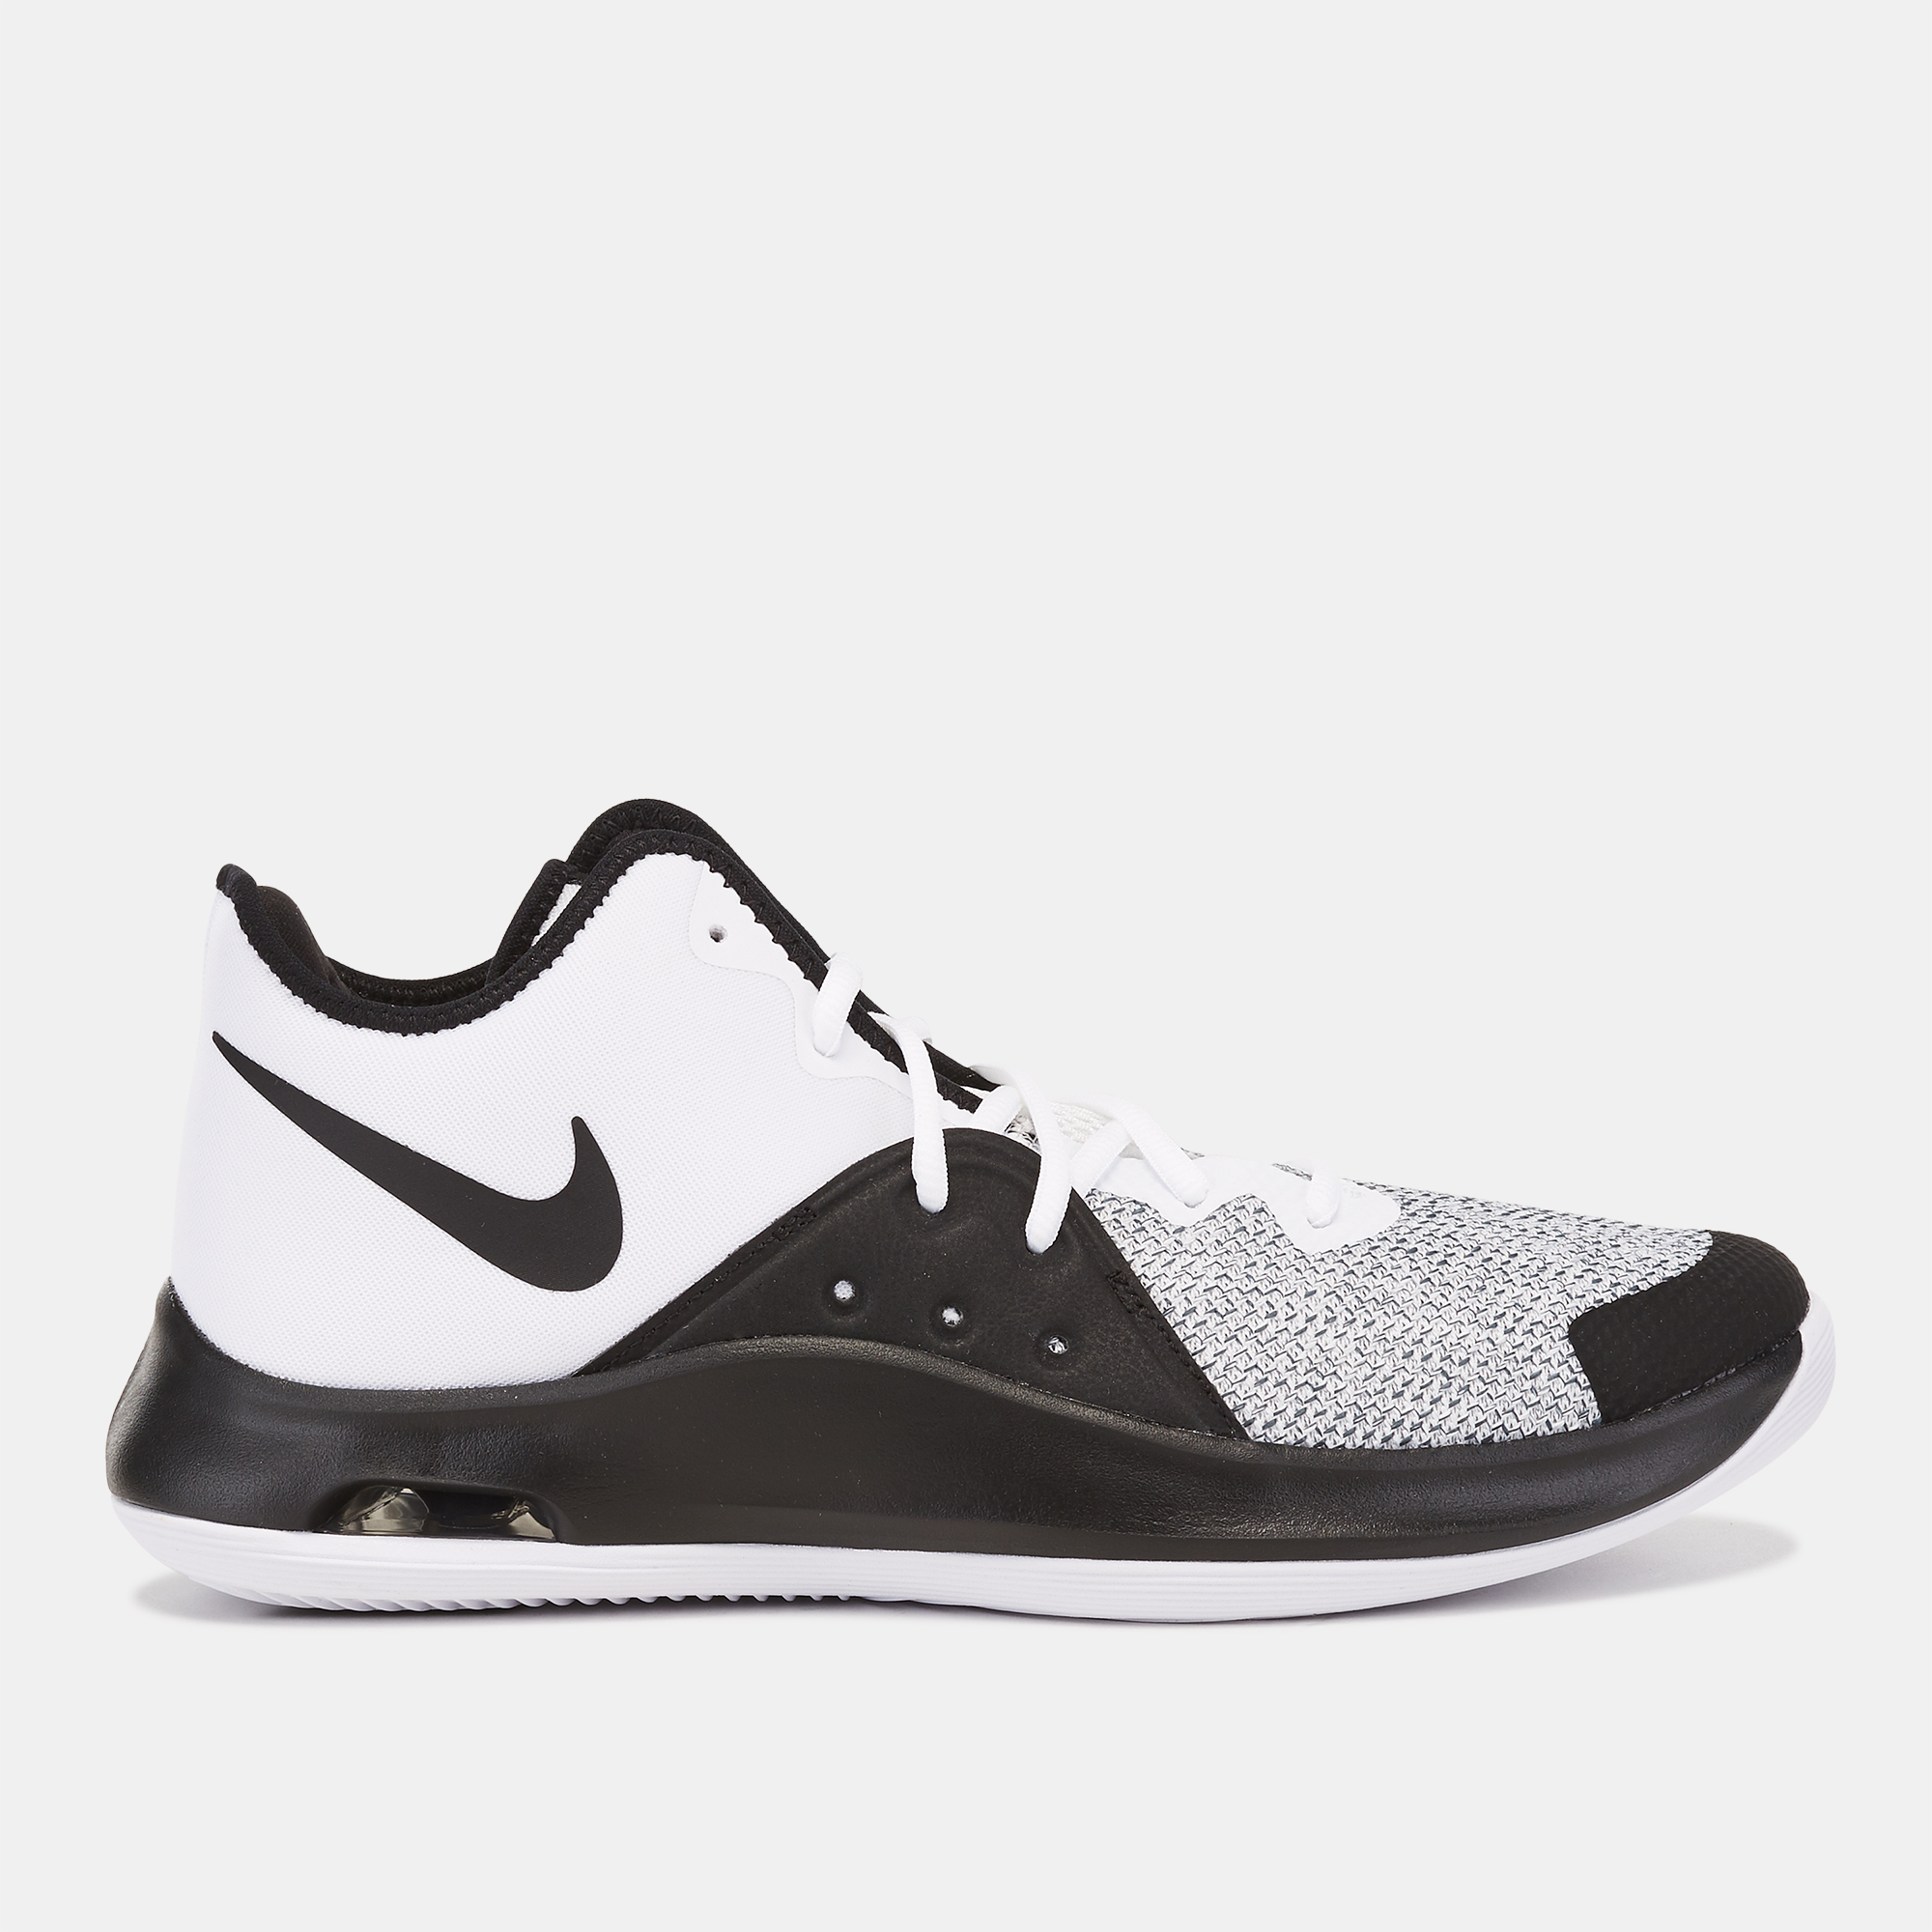 Nike Air Versatile III Basketball Shoe 